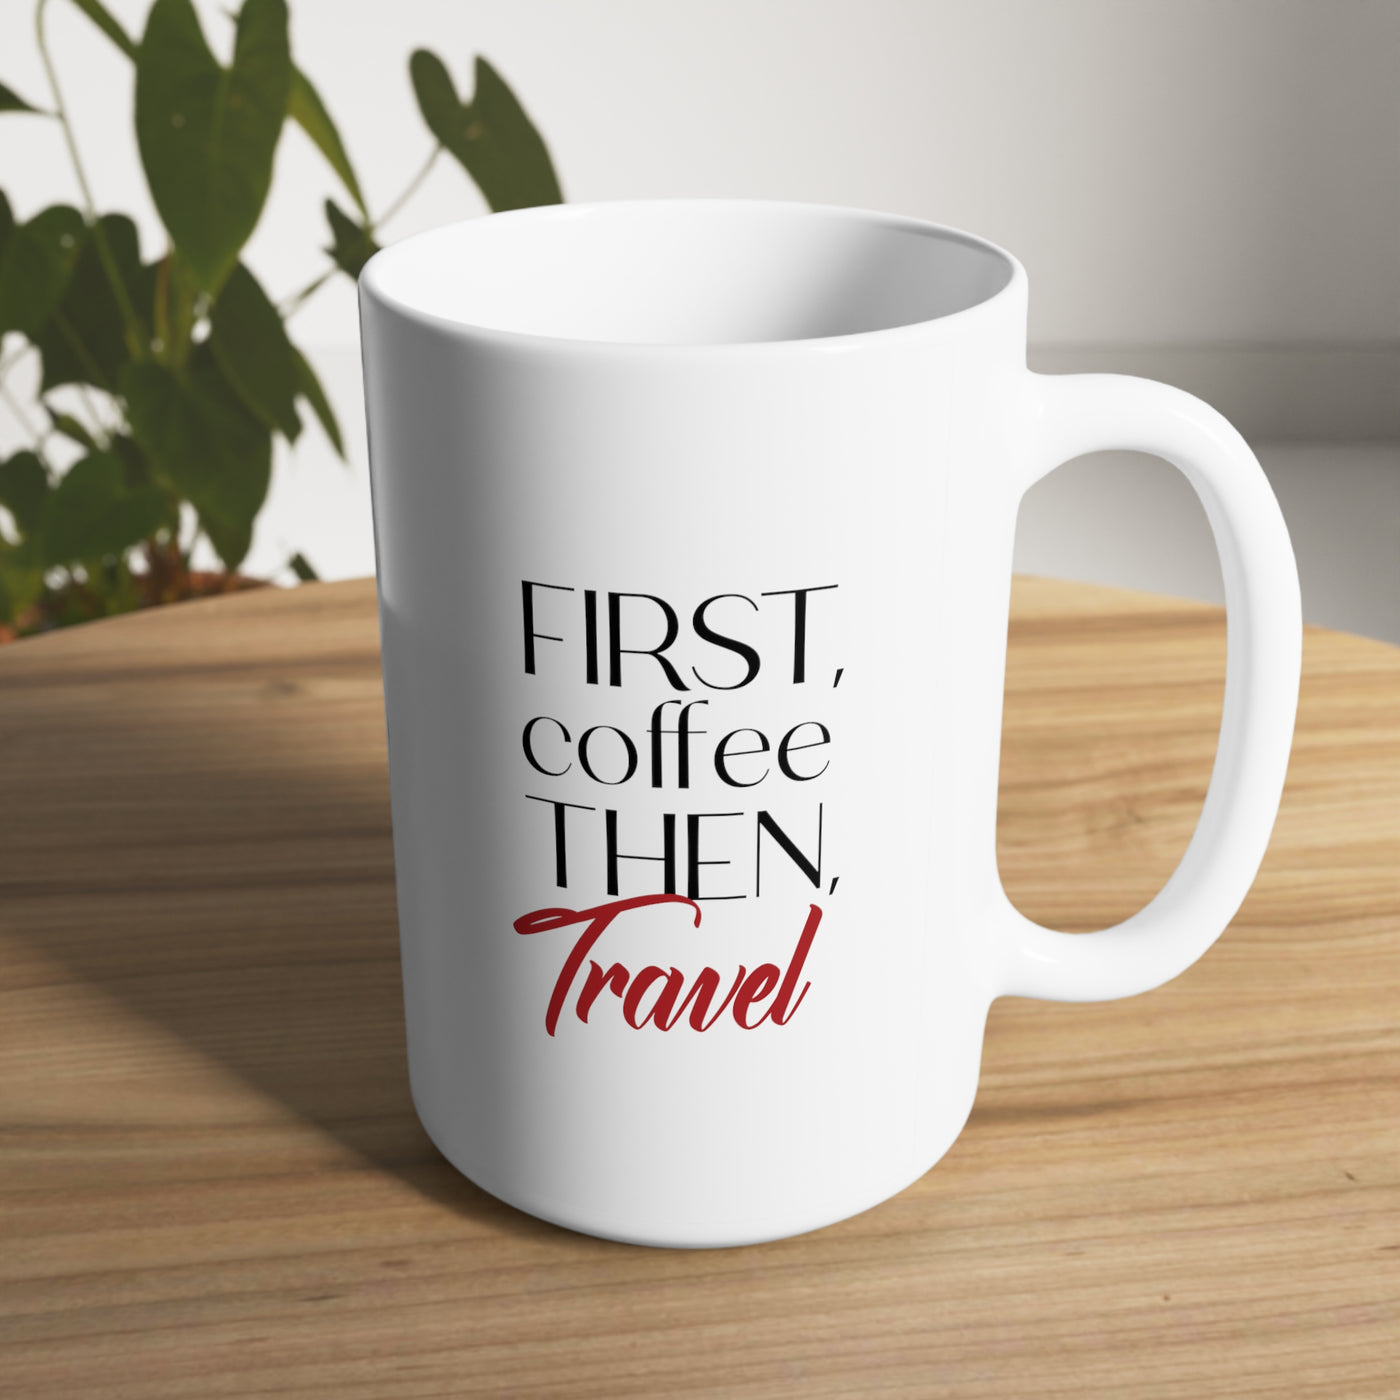 First Coffee Then Travel White Ceramic Mug, 15oz